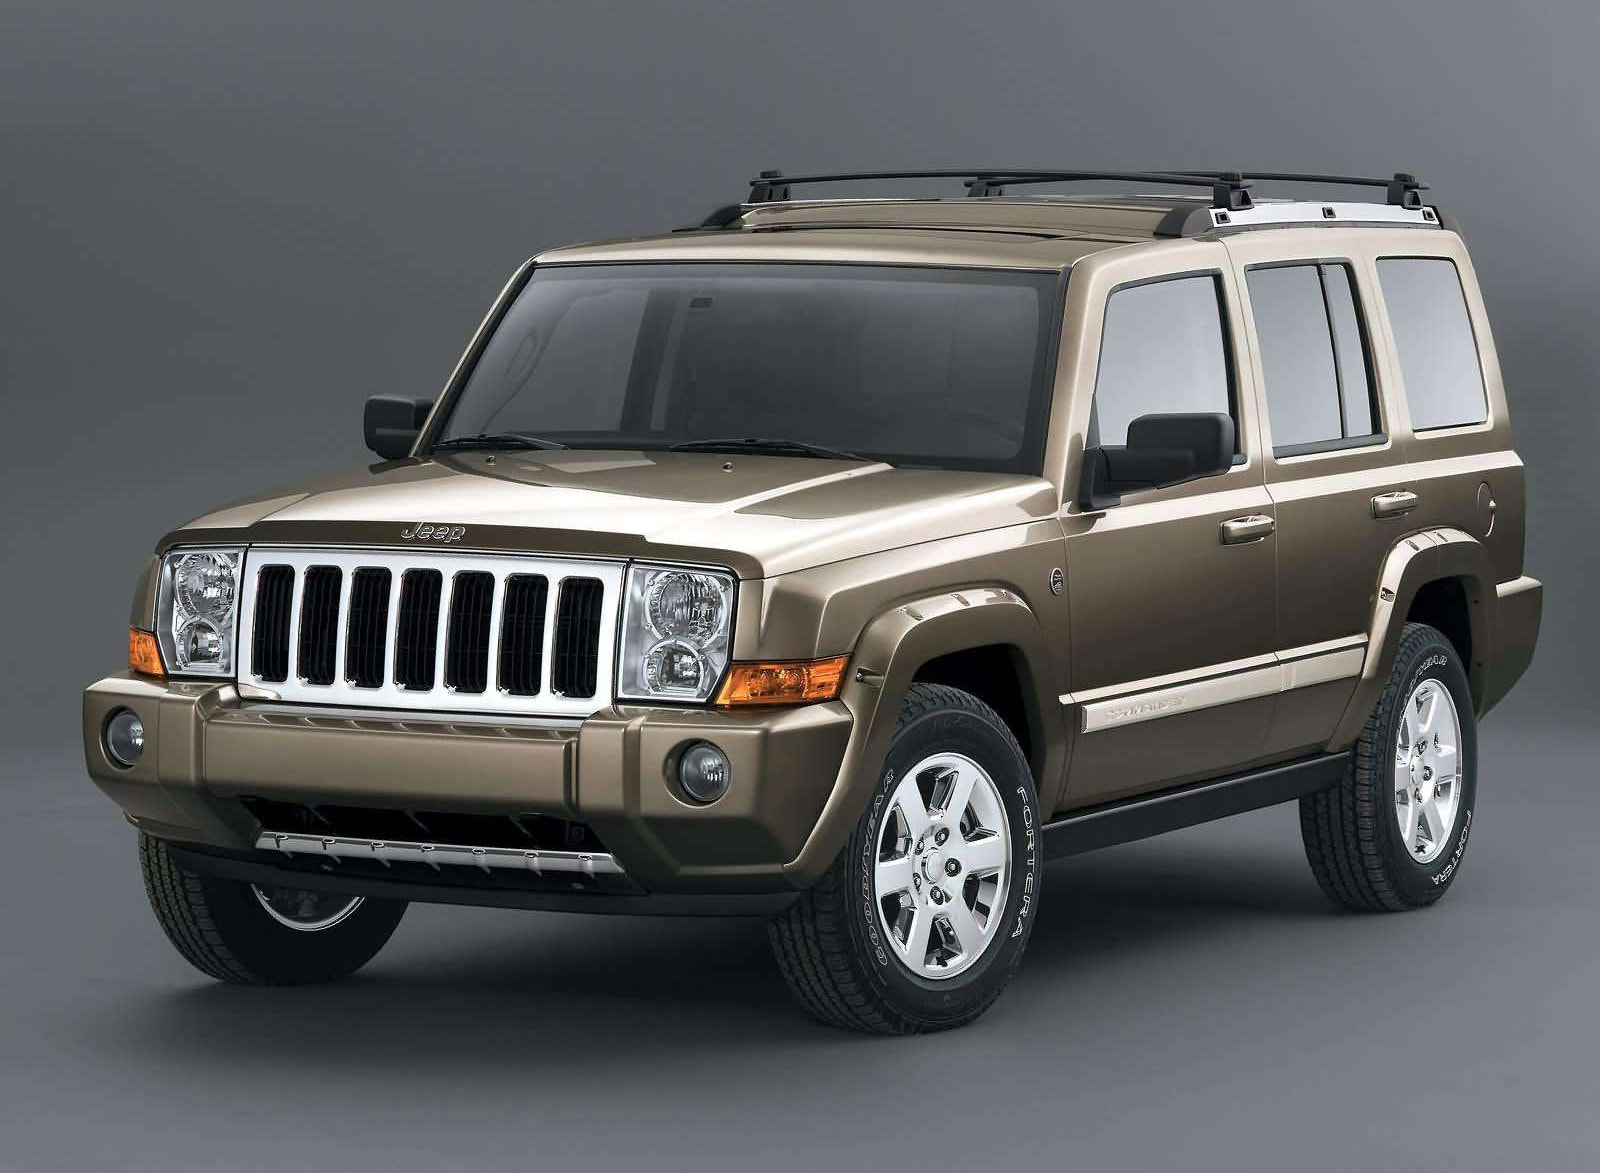 Chrysler dodge jeep recall #3